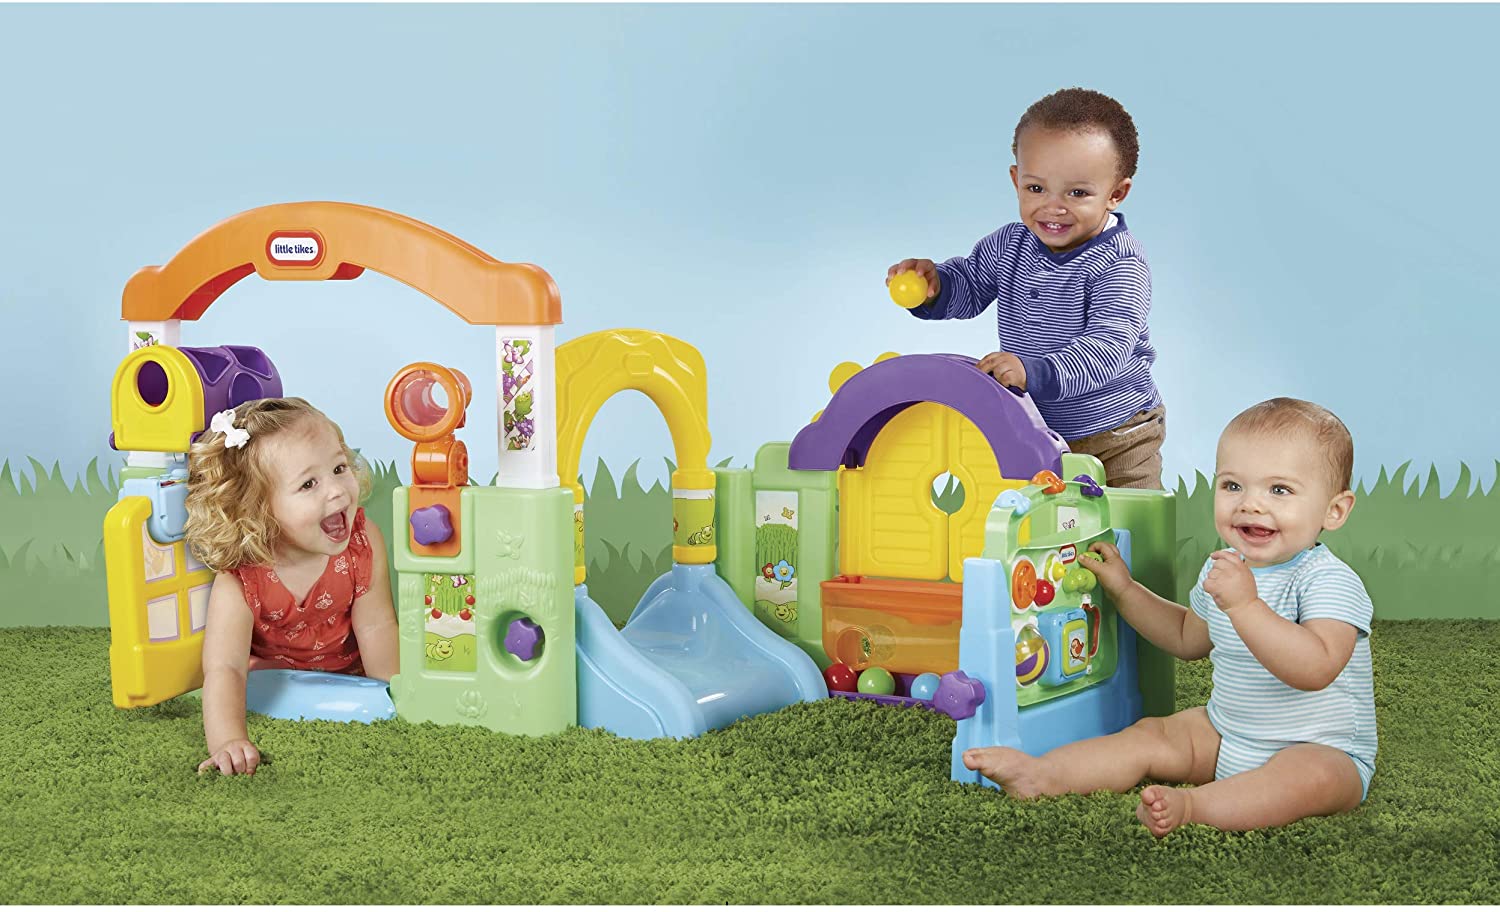 Toddler Swing Set Indoor & Outdoor Play Set For Infants 9-36 months Rooms Yard 